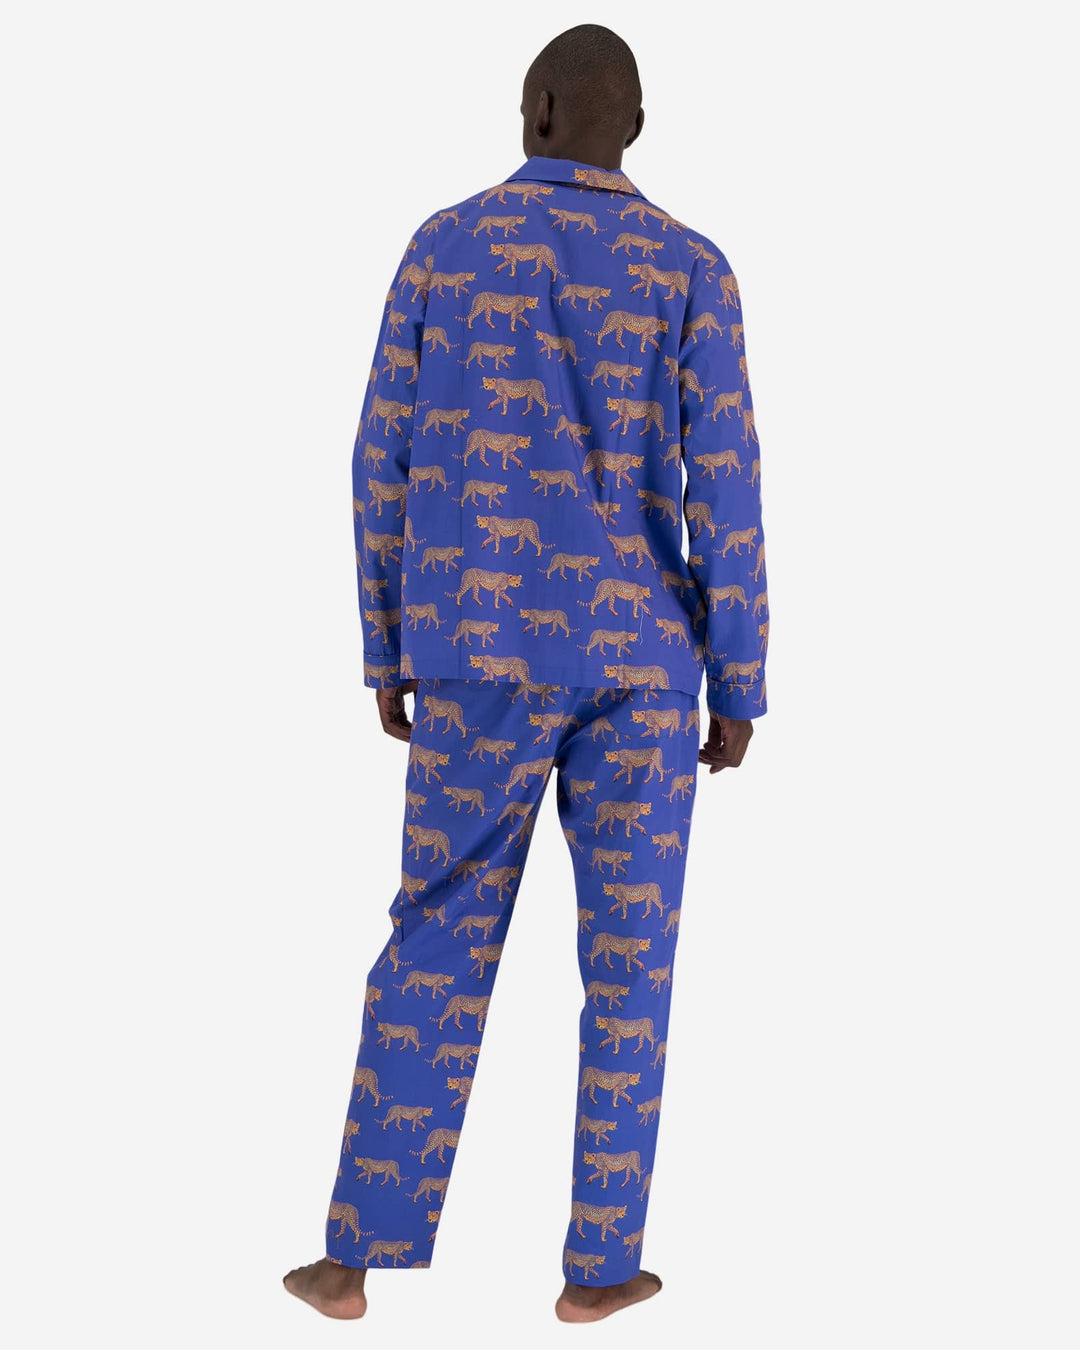 Electric blue pyjamas set for men with cheetahs